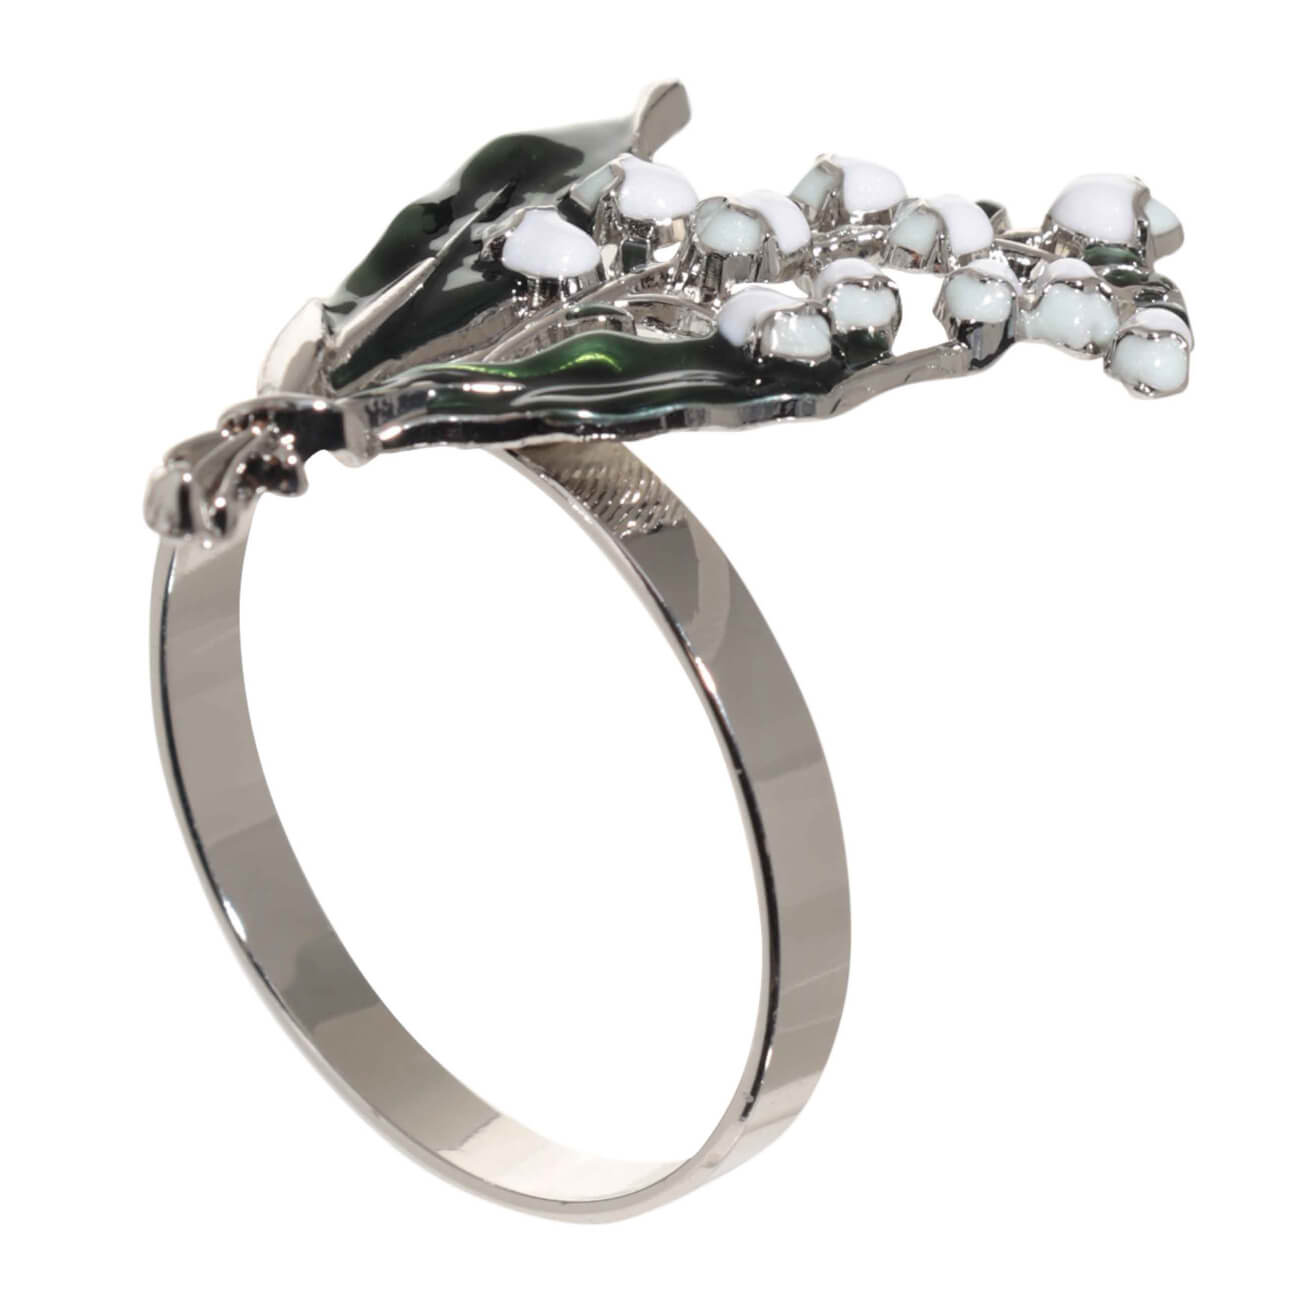 kuchenland кольцо для салфеток 5 см 2 шт металл серебристое перо feather Кольцо для салфеток, 5 см, металл, зелено-серебристое, Ландыш с листьями, May-lily